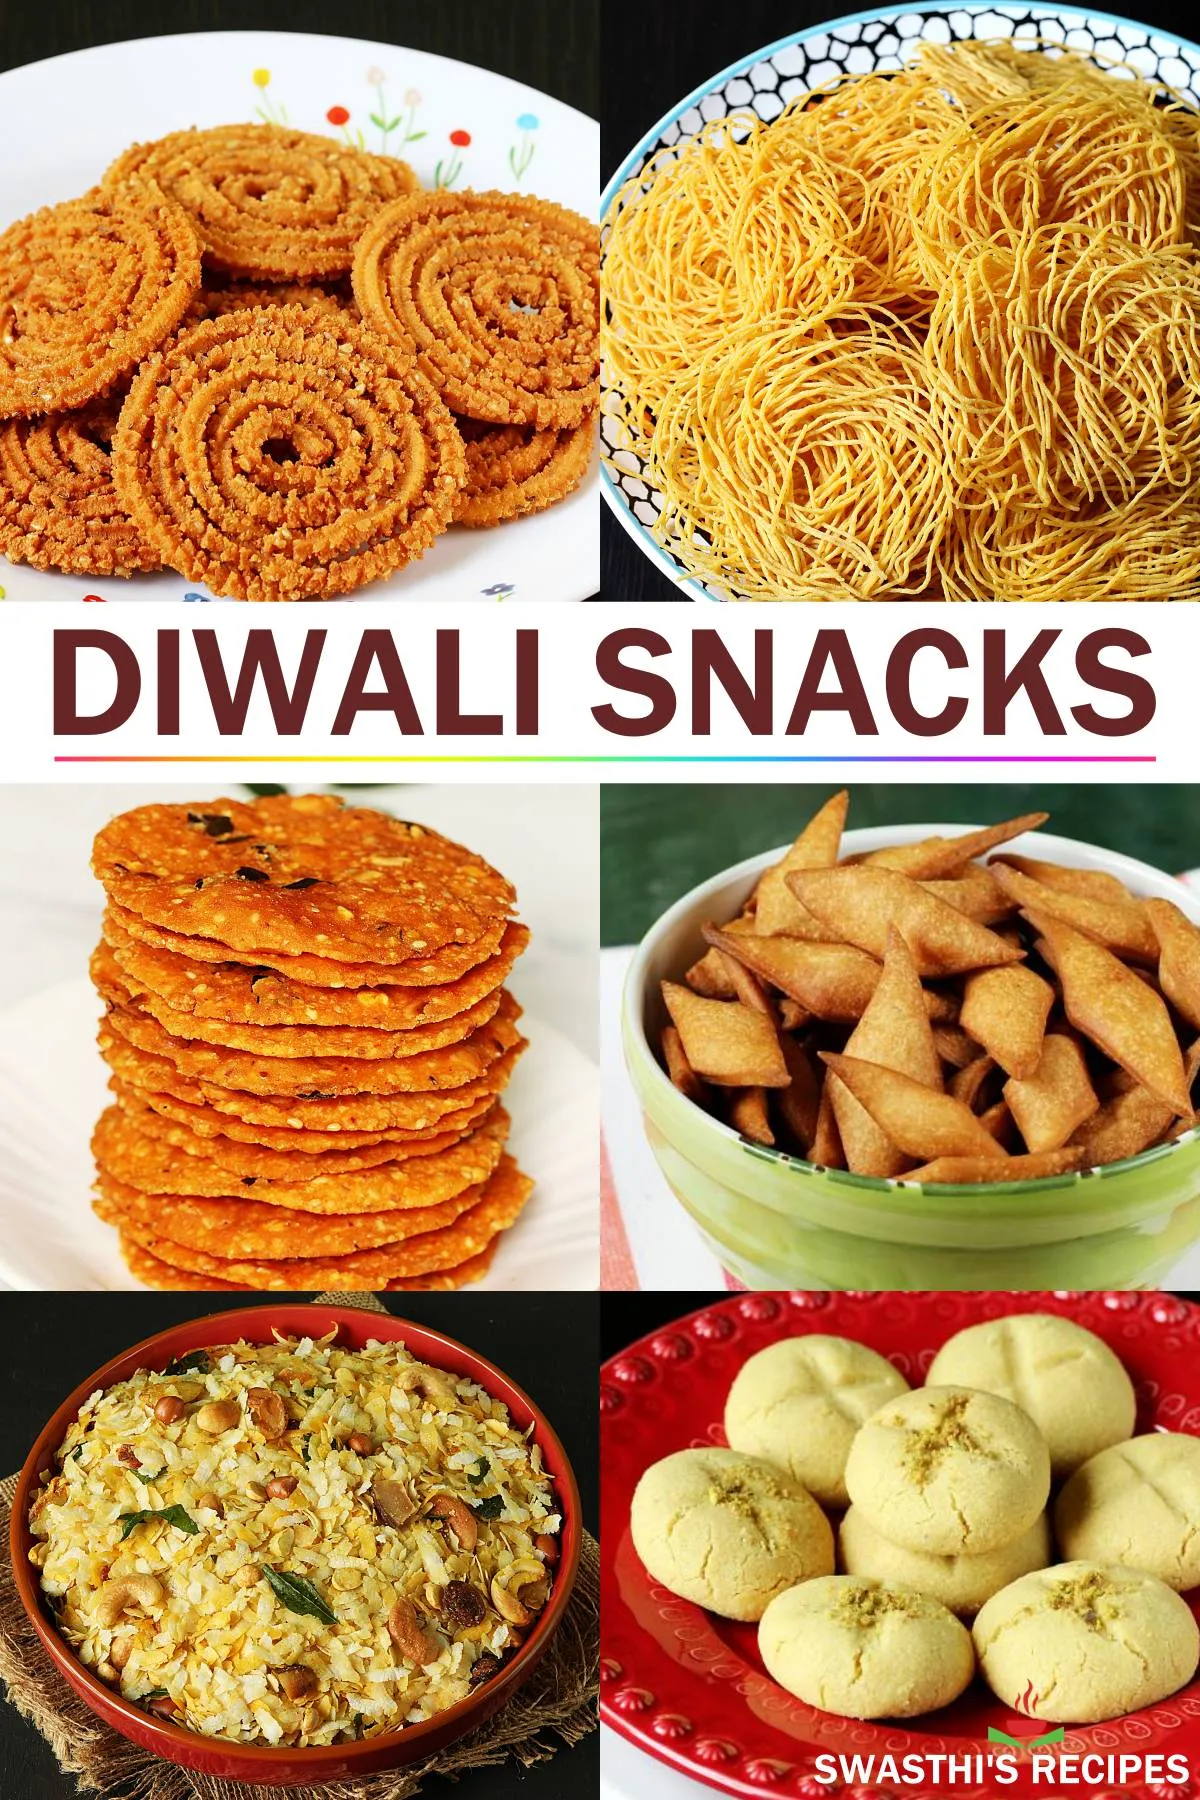 Diwali snacks recipes 2021 - chakli sev nippattu shankarpali chivda nankhatai